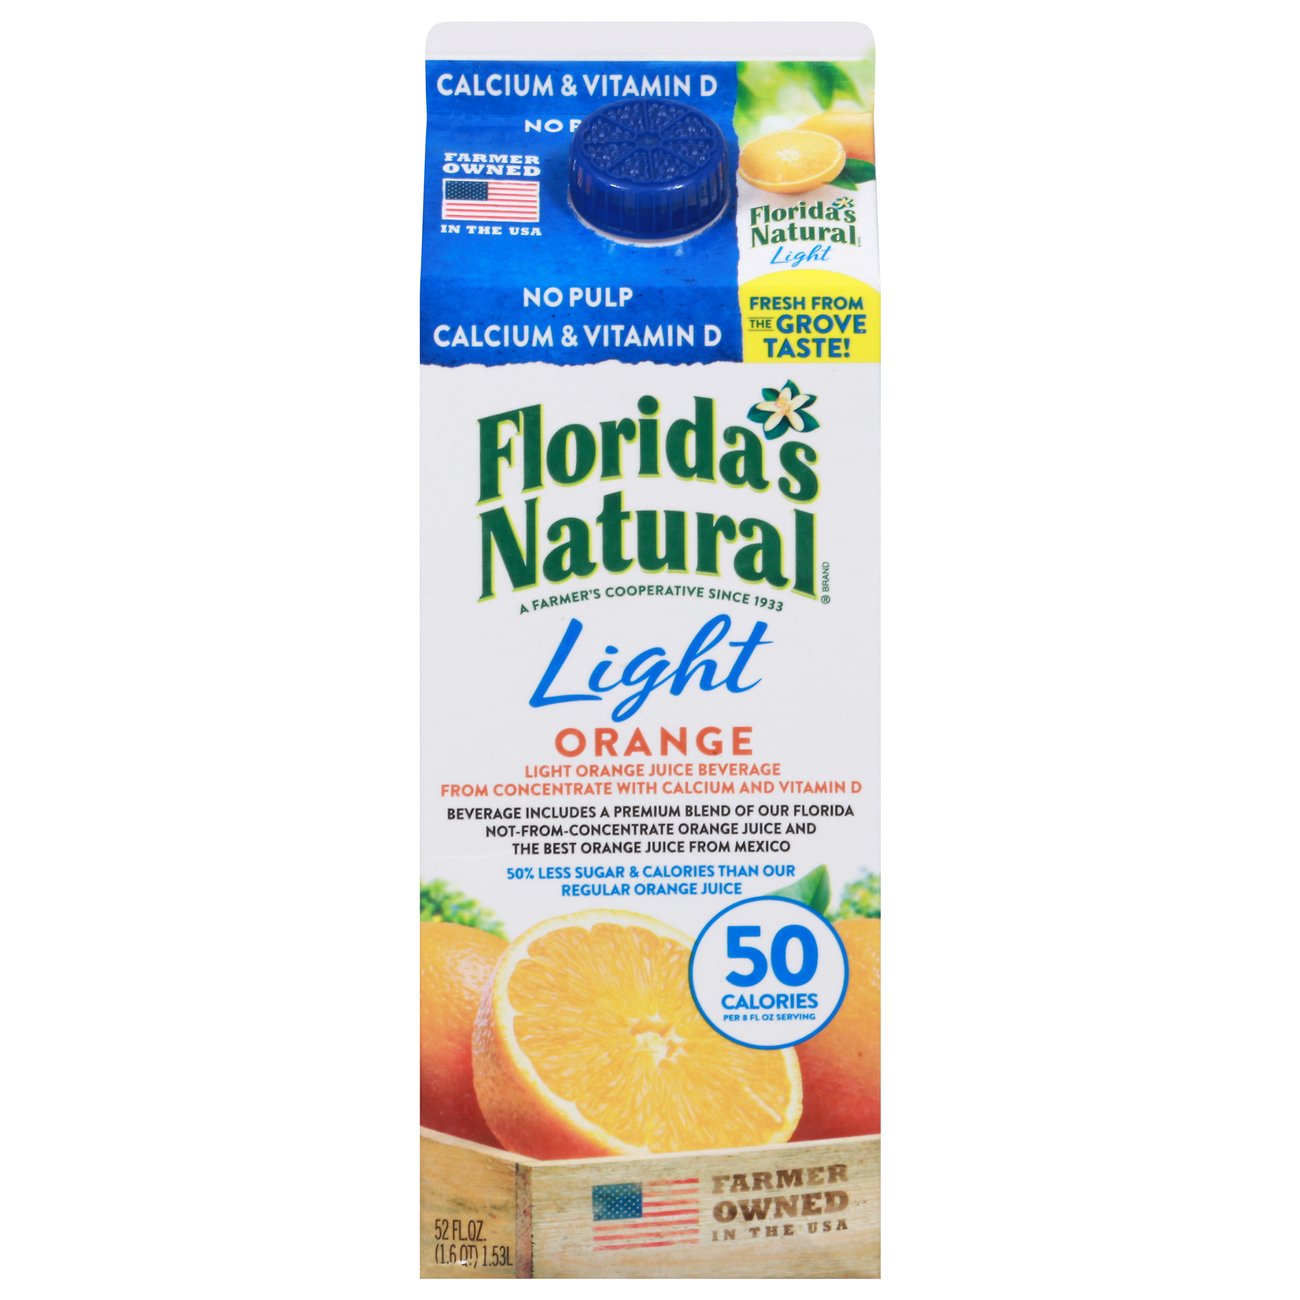 Florida's Natural Light Orange Juice No Pulp Calcium - Shop Juice at H-E-B